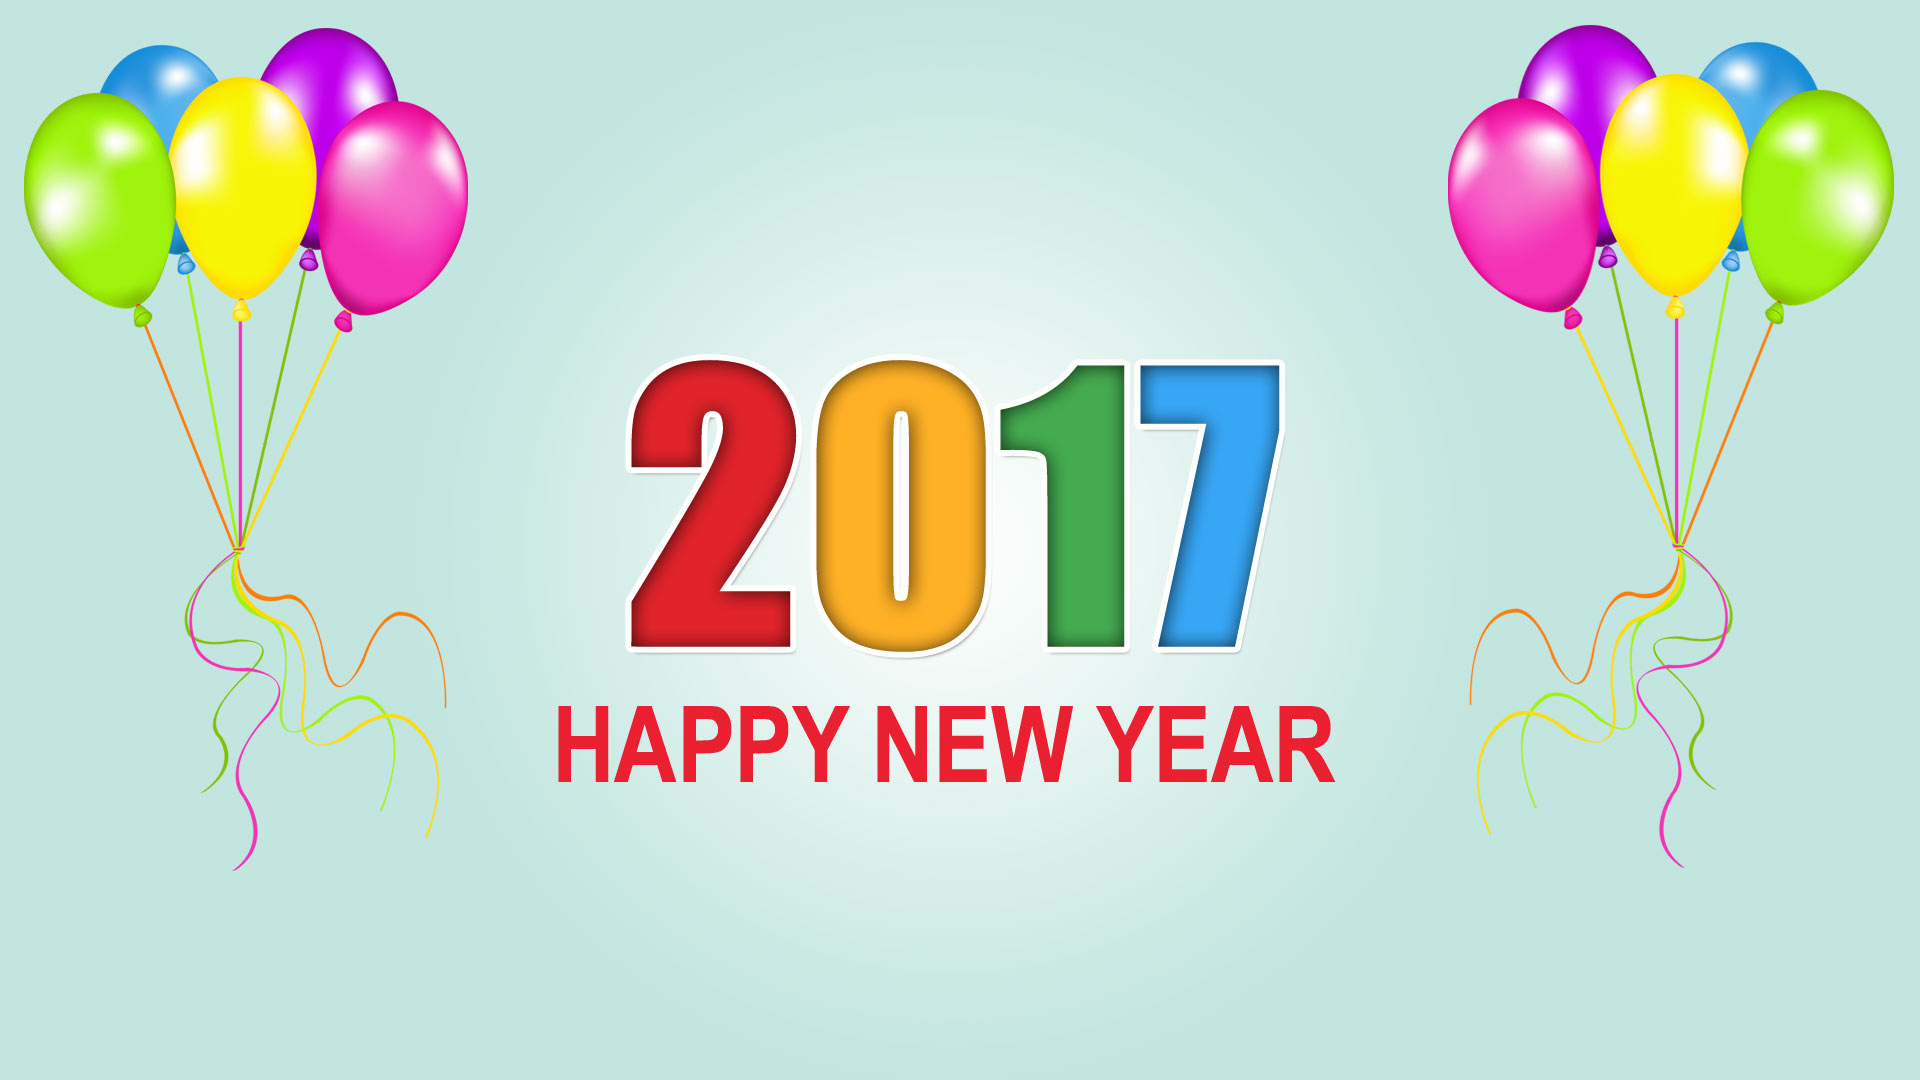 Happy New Year 2017 wallpaper   shinetalkscom